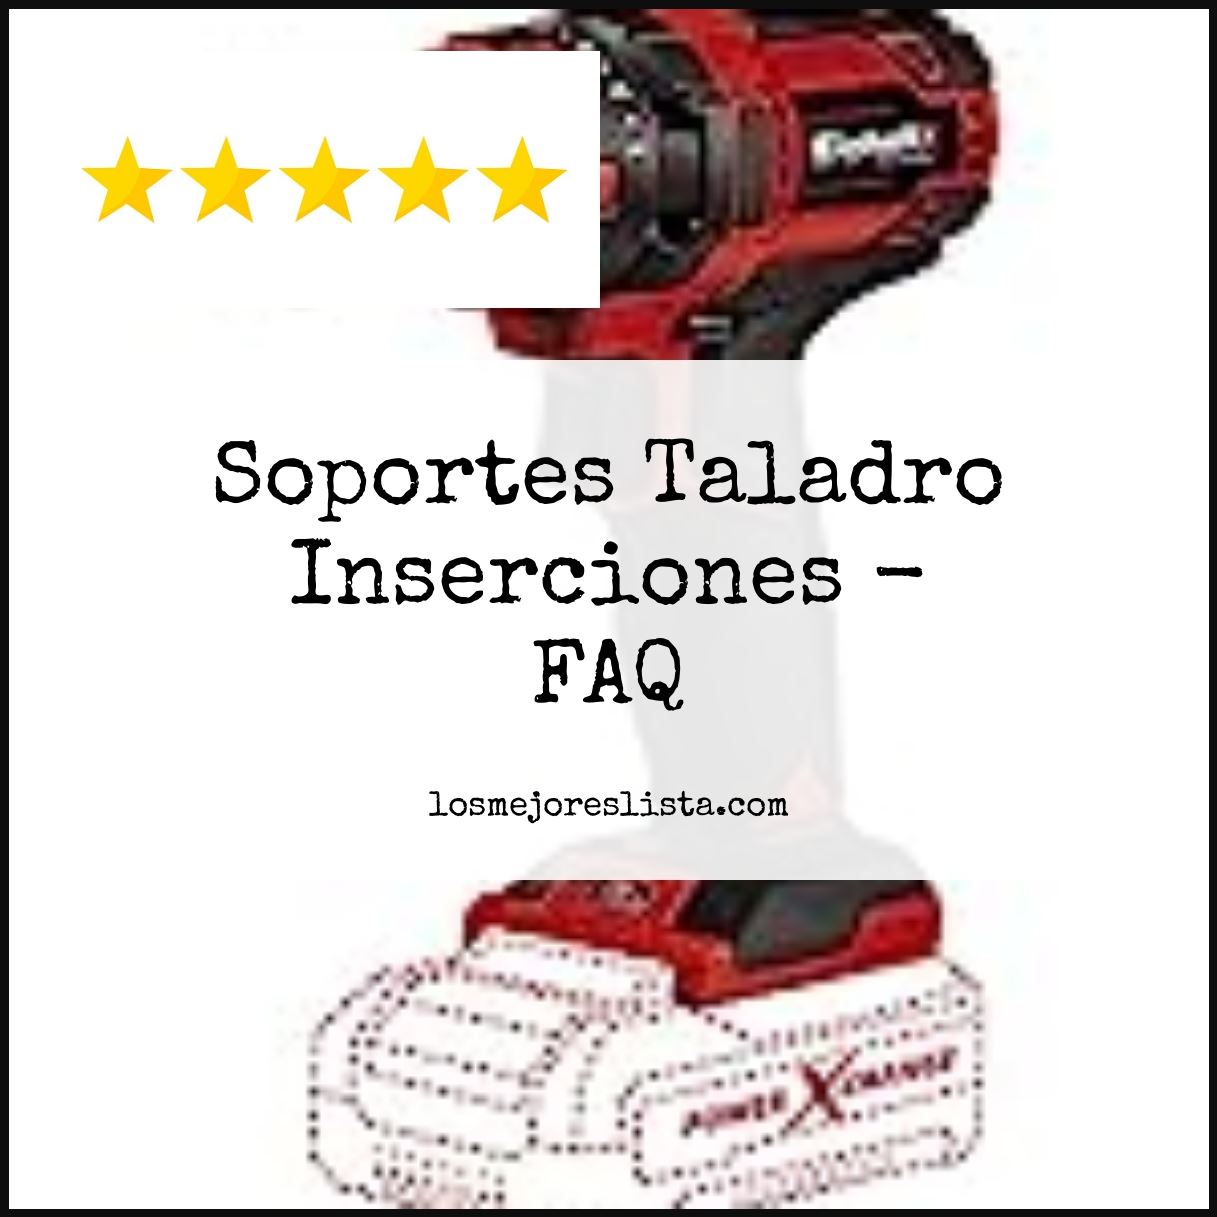 Soportes Taladro Inserciones - FAQ